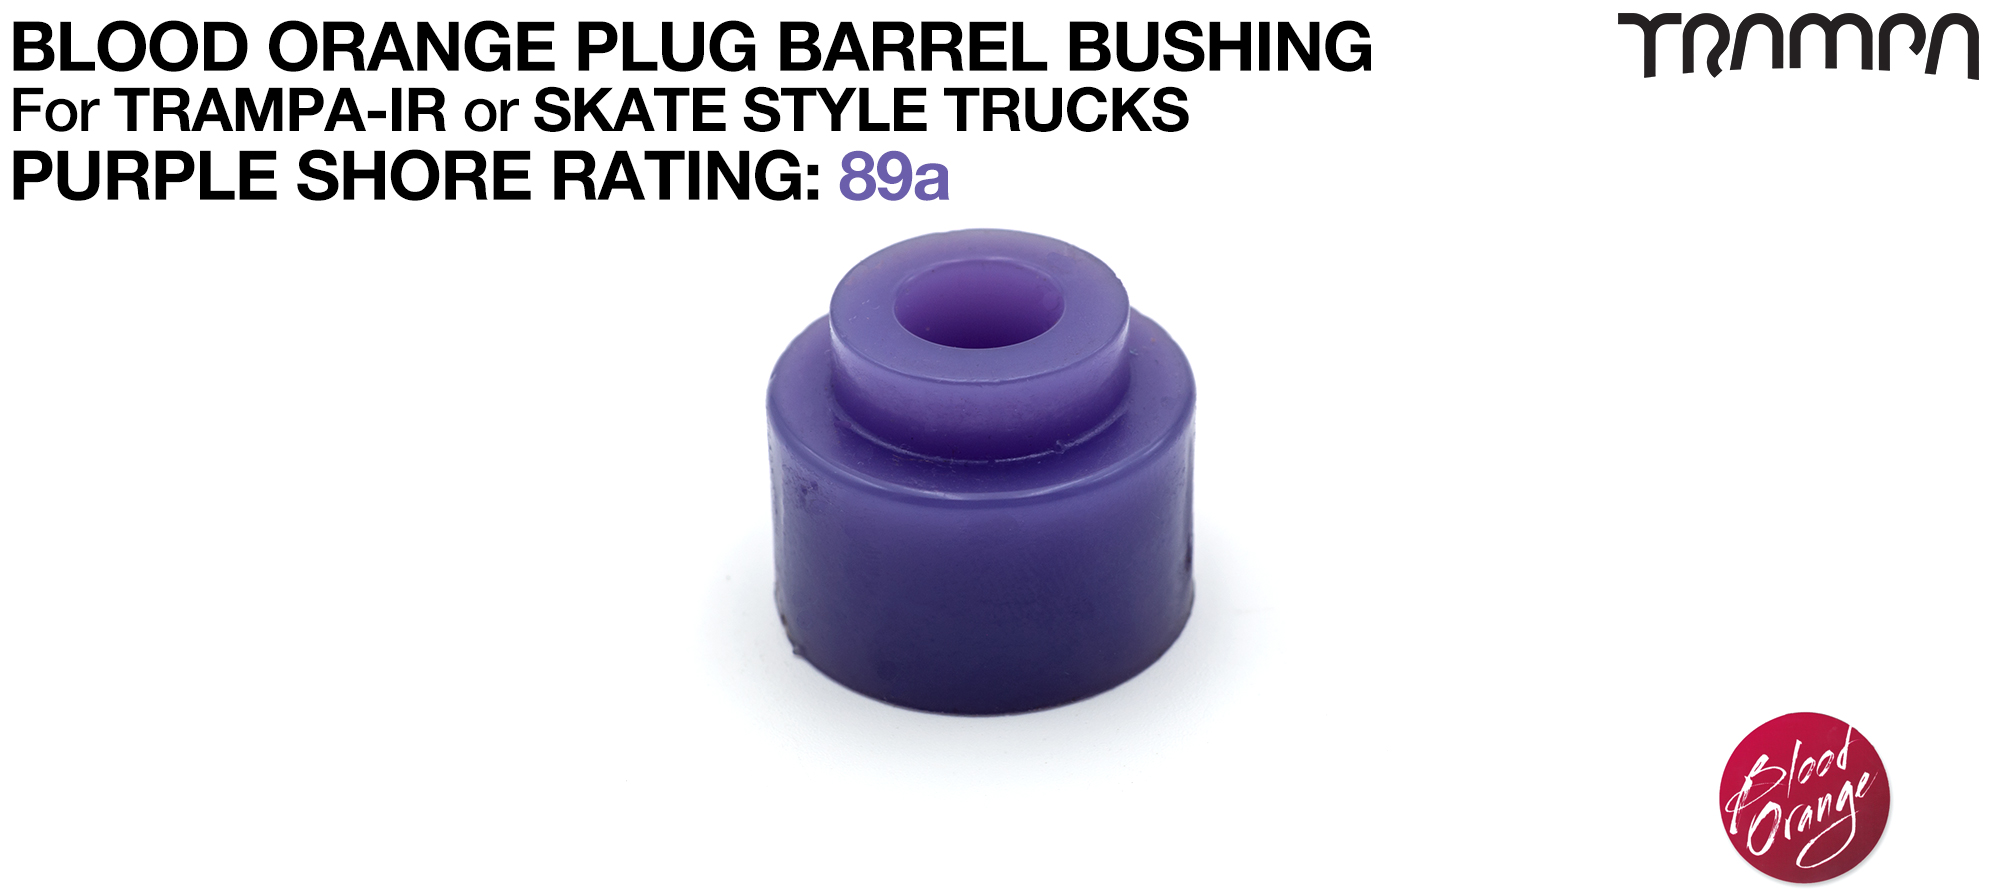 PLUG Bushing - Translucent PURPLE 89a